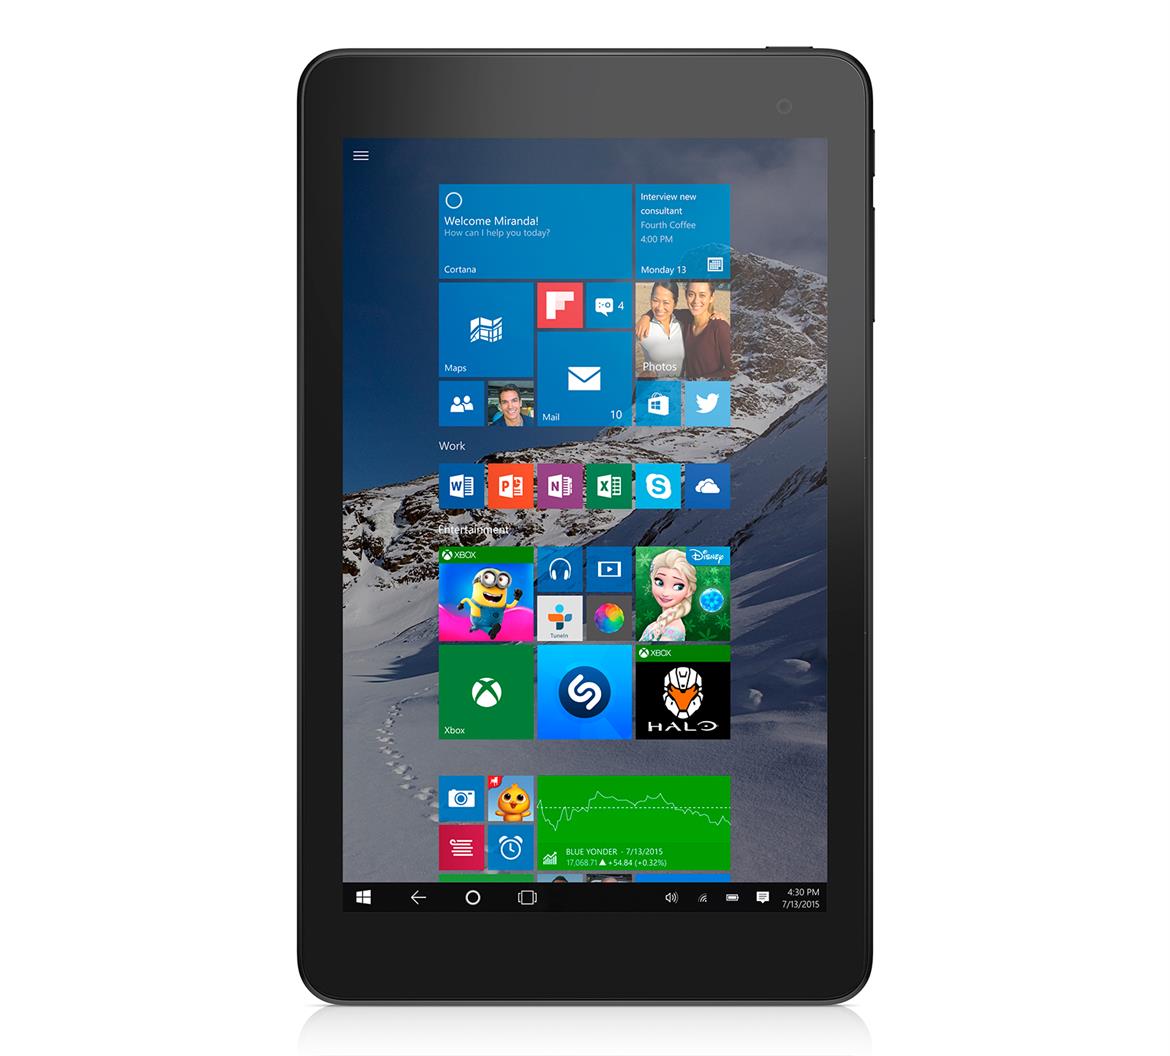 Dell Venue 8 Pro 5000, Venue 10 Pro 5000 Tablets Enlist Intel Atom x5 Power And Windows 10